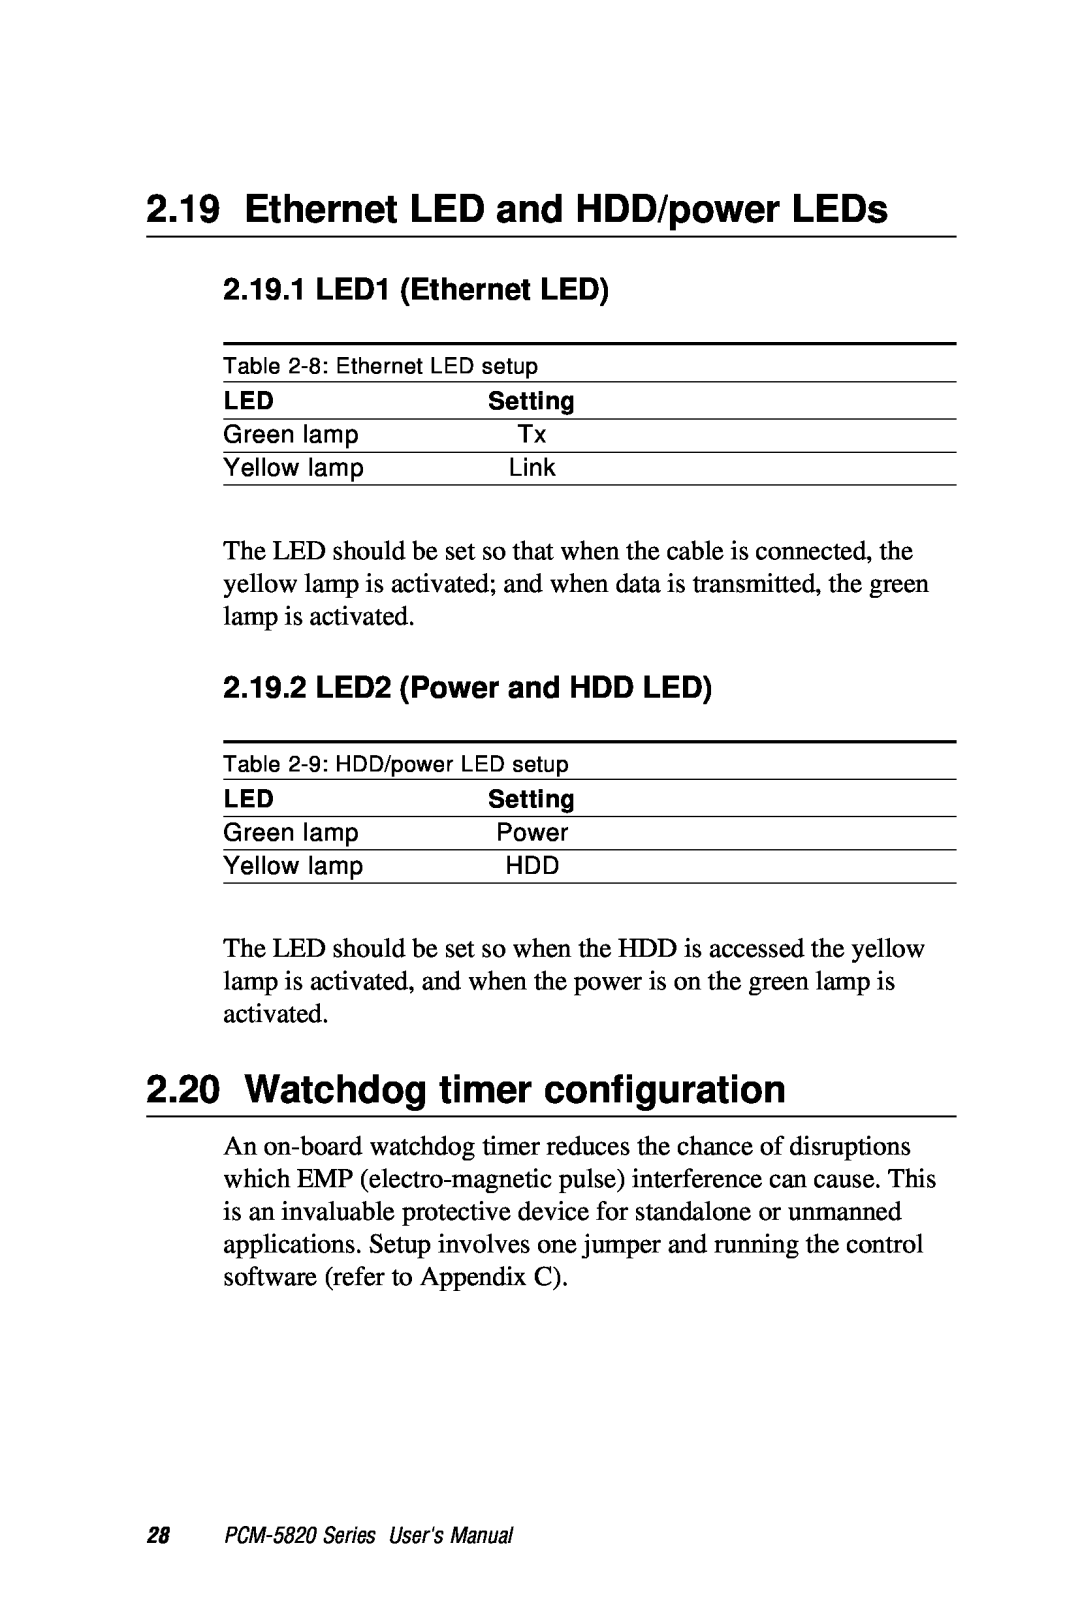 AMD PCM-5820 manual Ethernet LED and HDD/power LEDs, Watchdog timer configuration, 2.19.1 LED1 Ethernet LED 